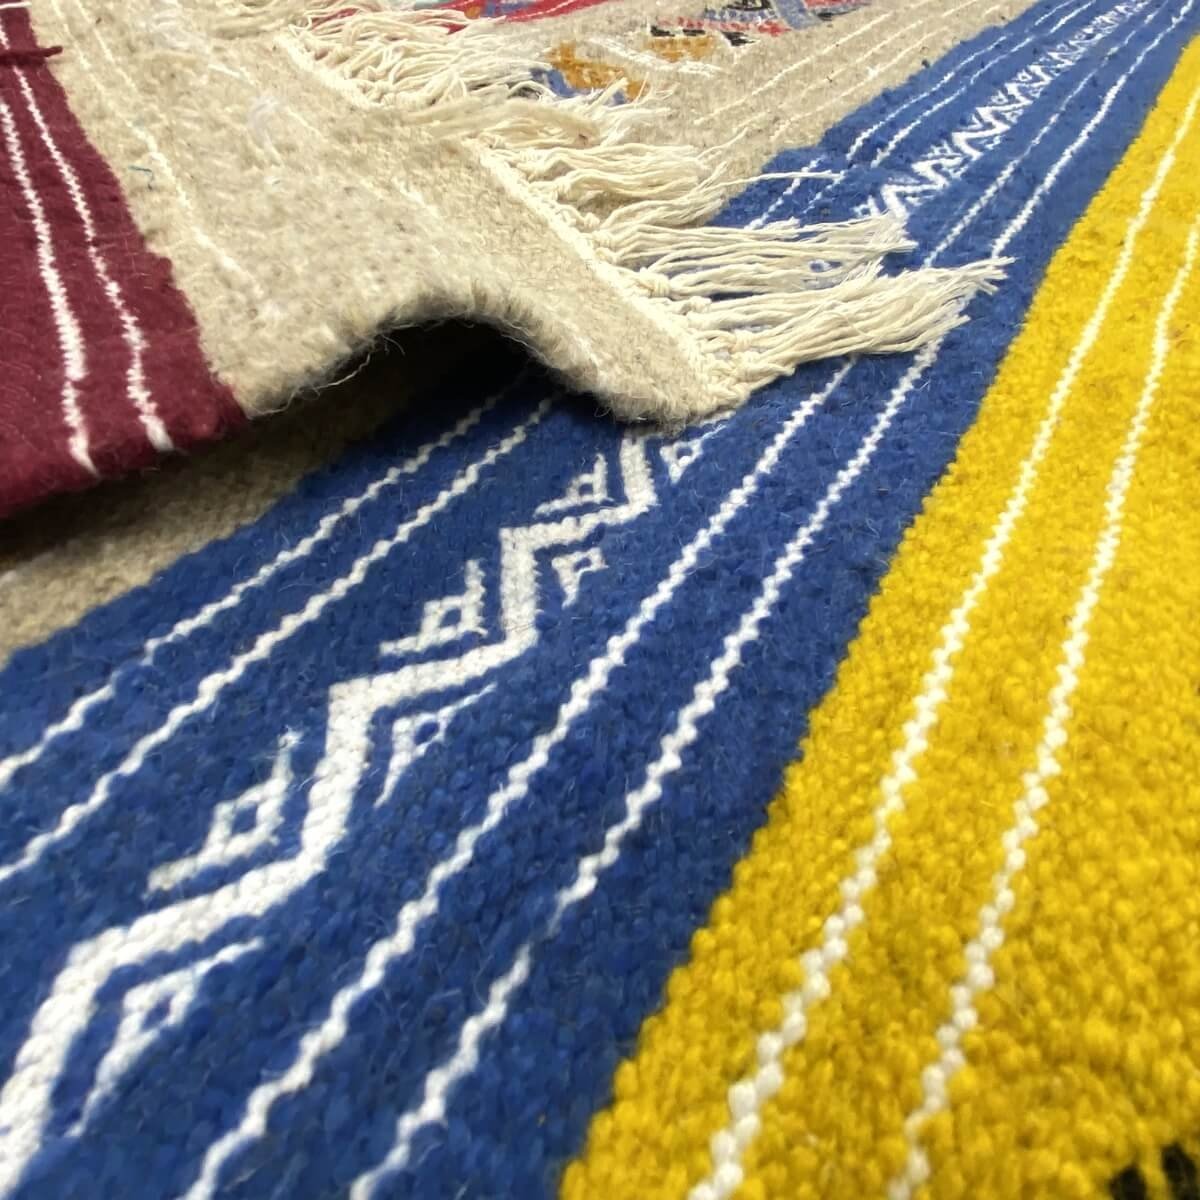 Tapete berbere Tapete Kilim Kela 115x210 Multicor (Tecidos à mão, Lã) Tapete tunisiano kilim, estilo marroquino. Tapete retangul